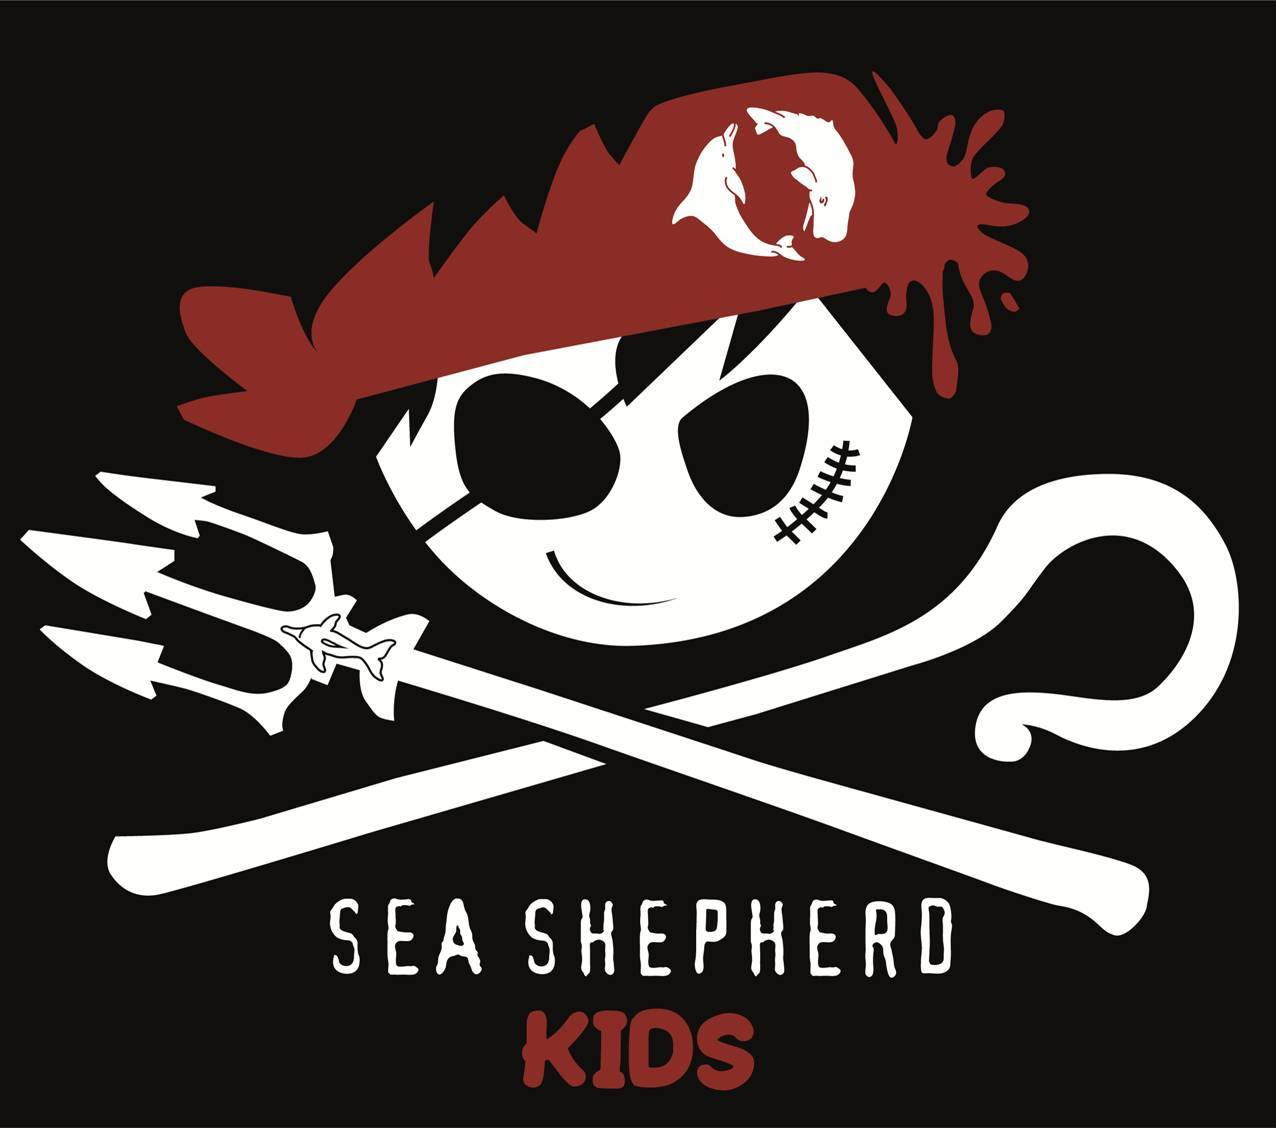 SEA SHEPHERD kids enfants ateliers océan environnement écologie